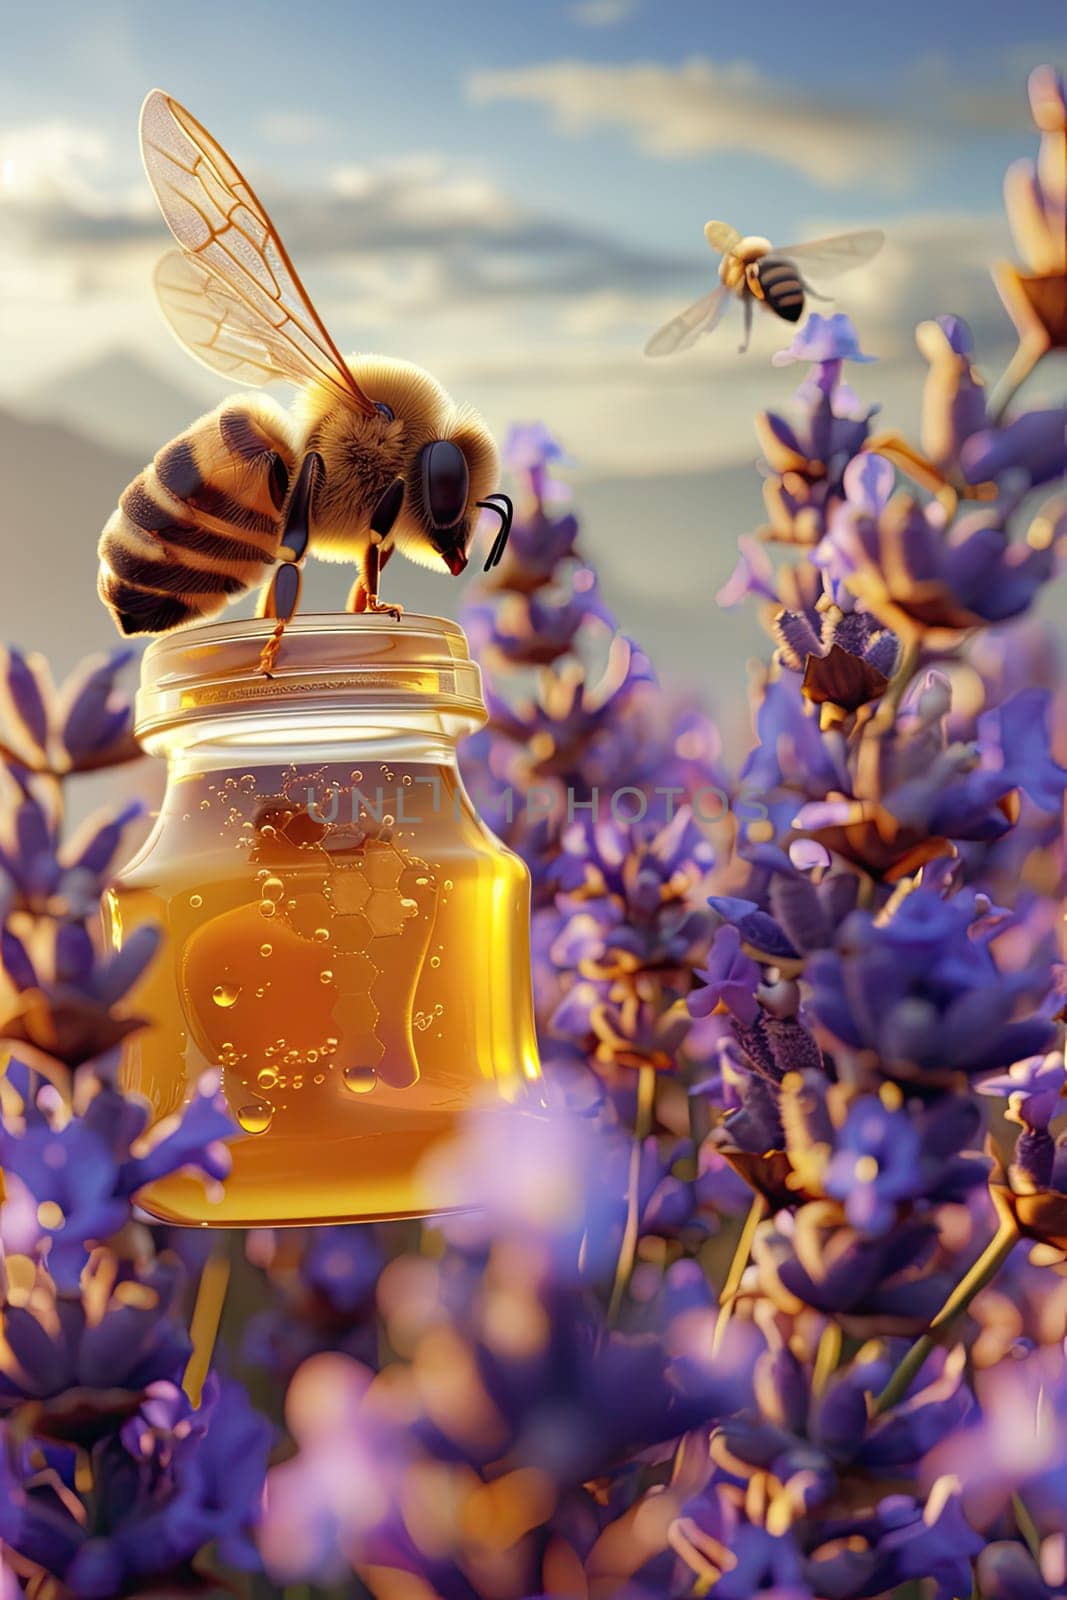 Bee on a jar of honey. Selective focus. food.